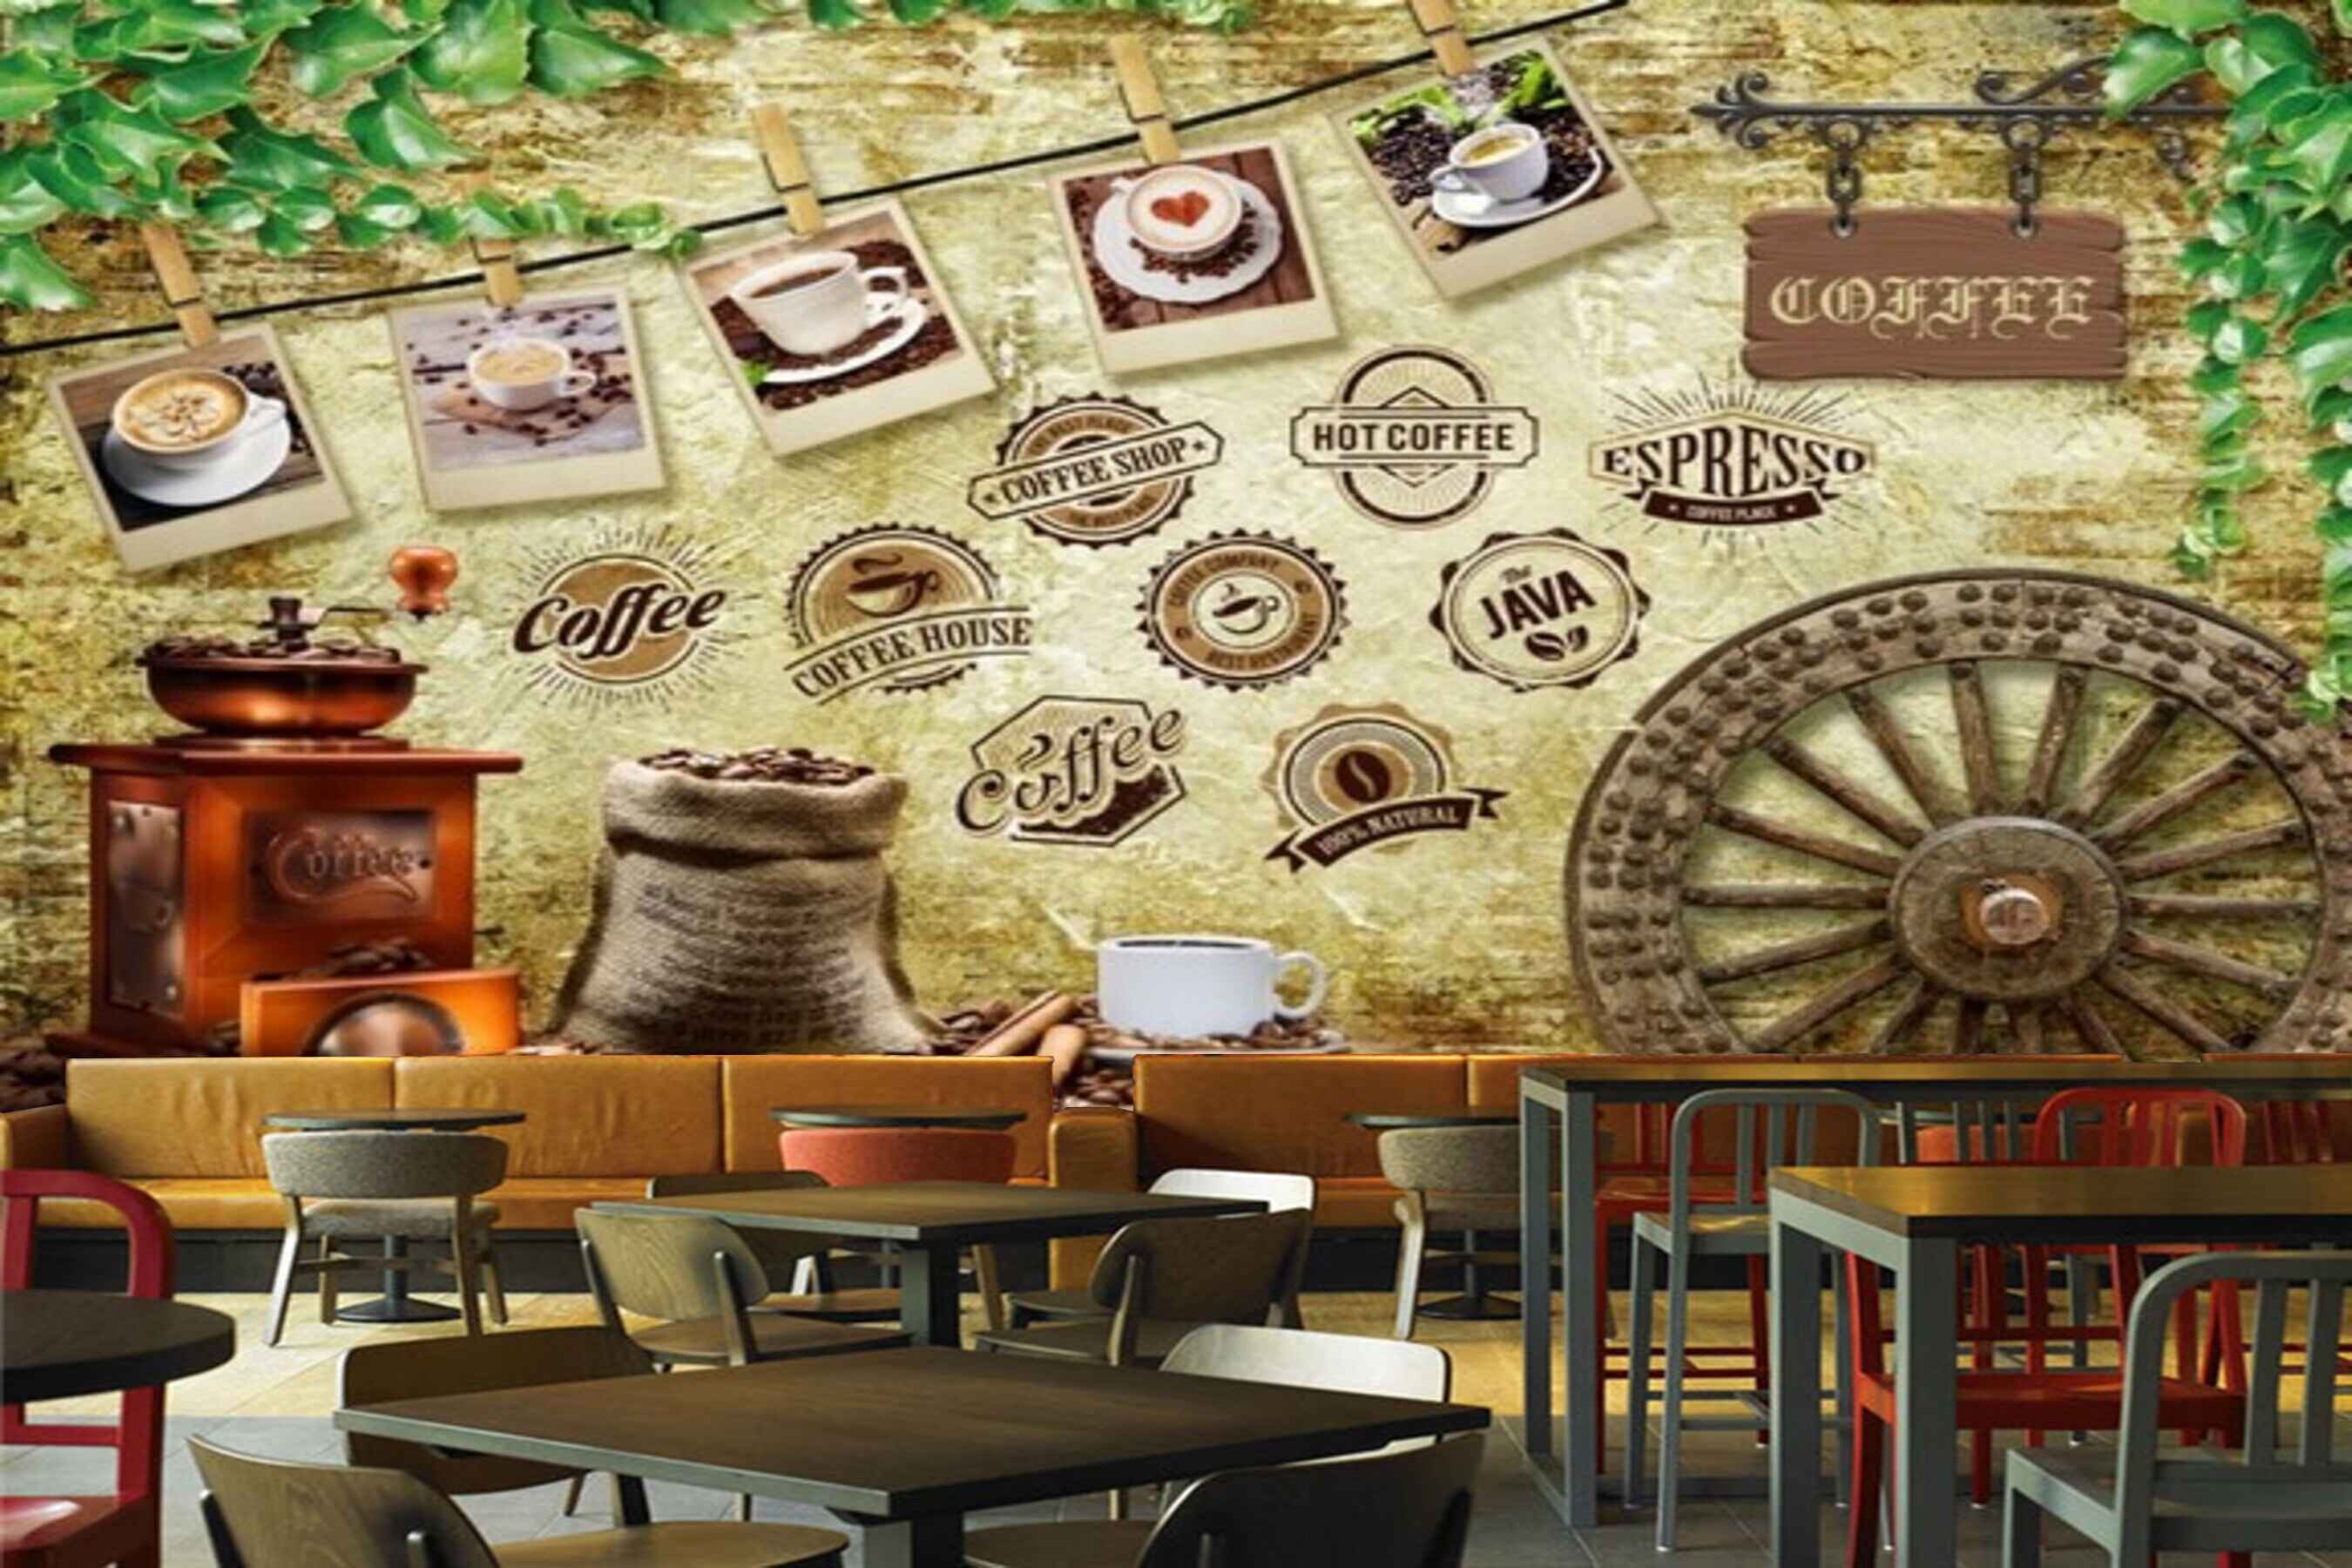 Avikalp MWZ3021 Coffee Shop Java Espresso Hot Coffee Beans HD Wallpaper for Cafe Restaurant